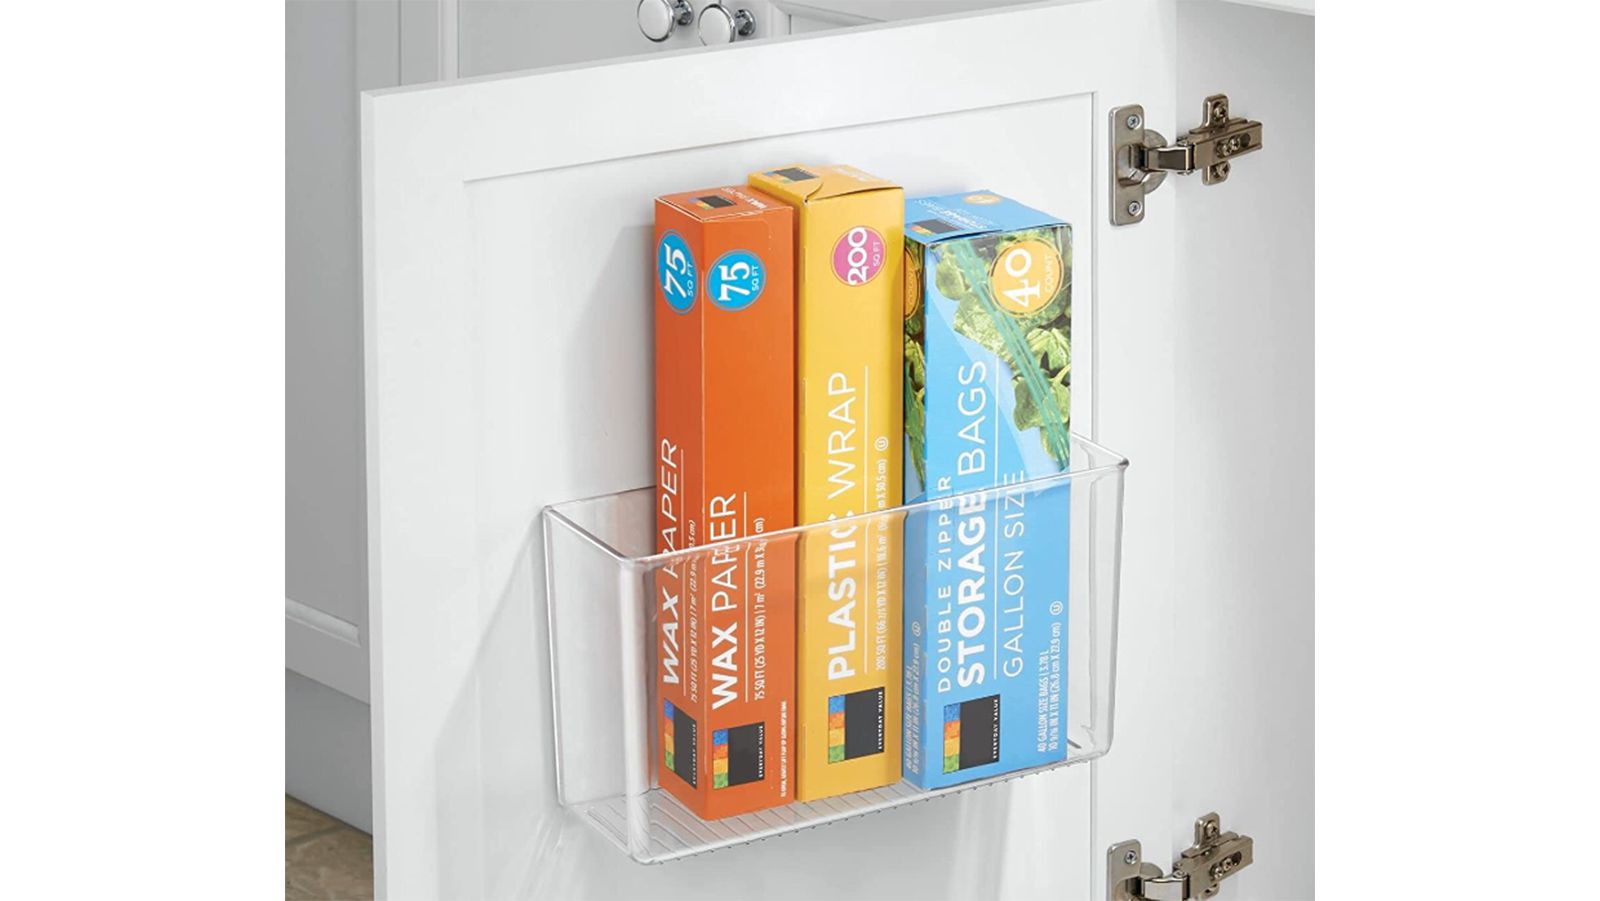 Mdesign Slim Plastic Bathroom Storage Container Bin, 5 Wide, 4 Pack :  Target